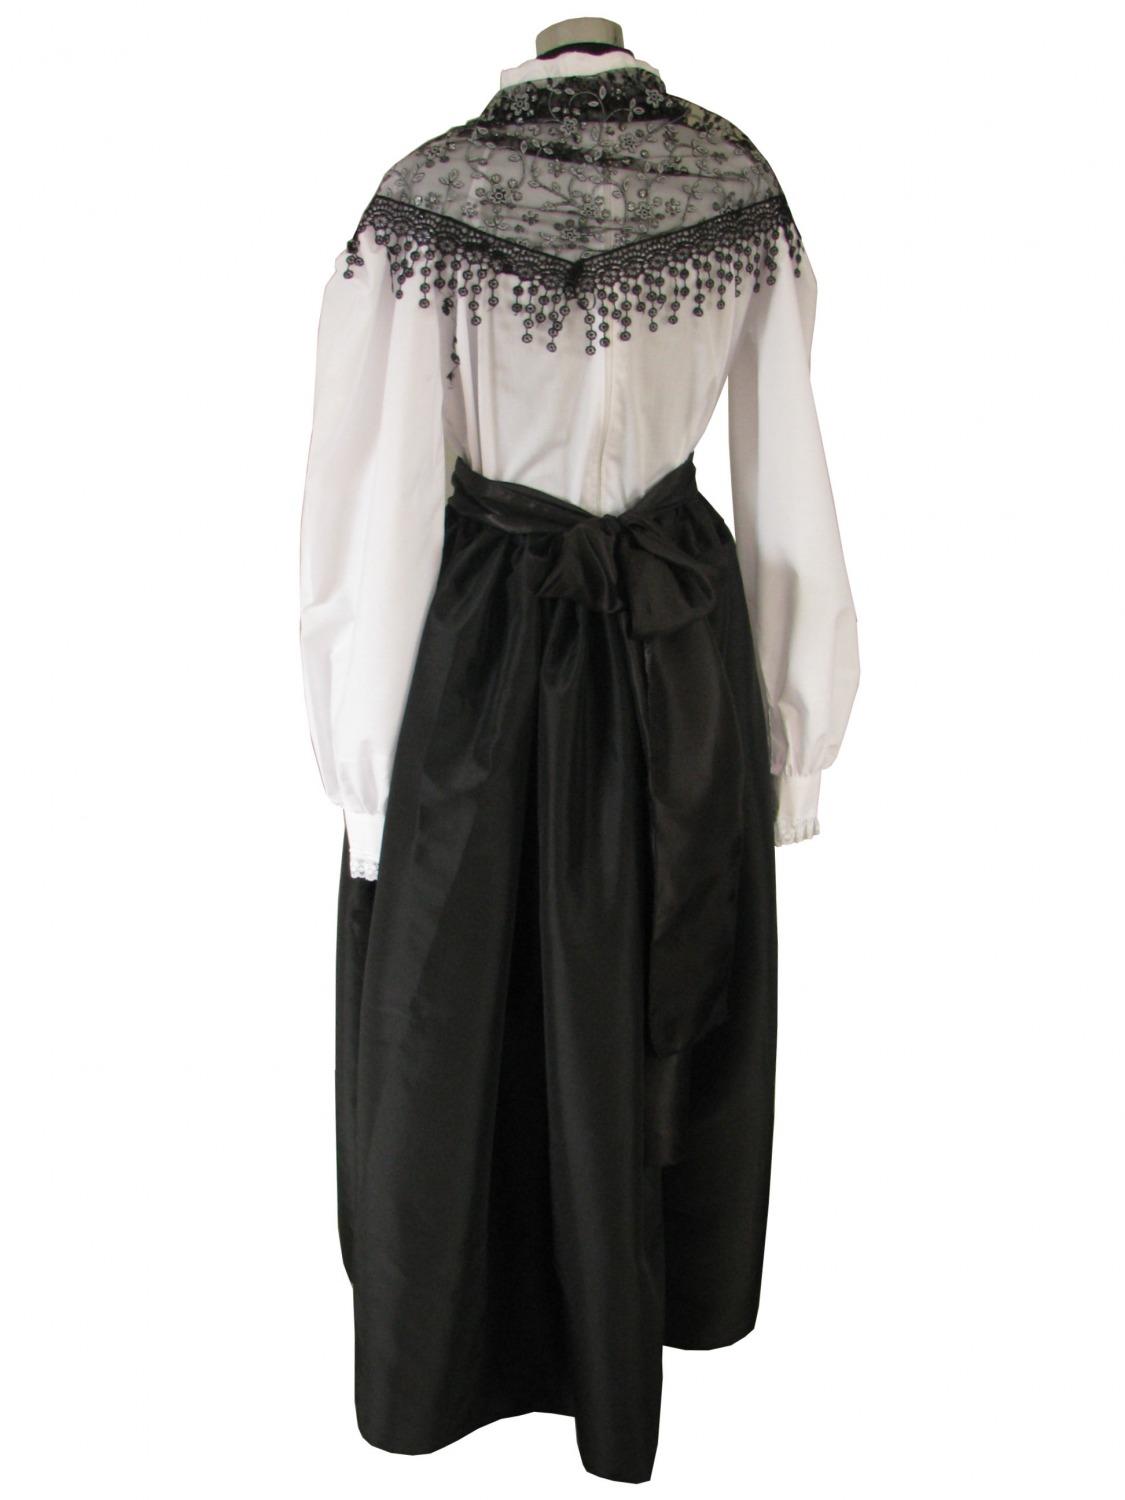 Ladies Victorian School Mistress Day Costume Edwardian suffragette Size 26 - 28 Image